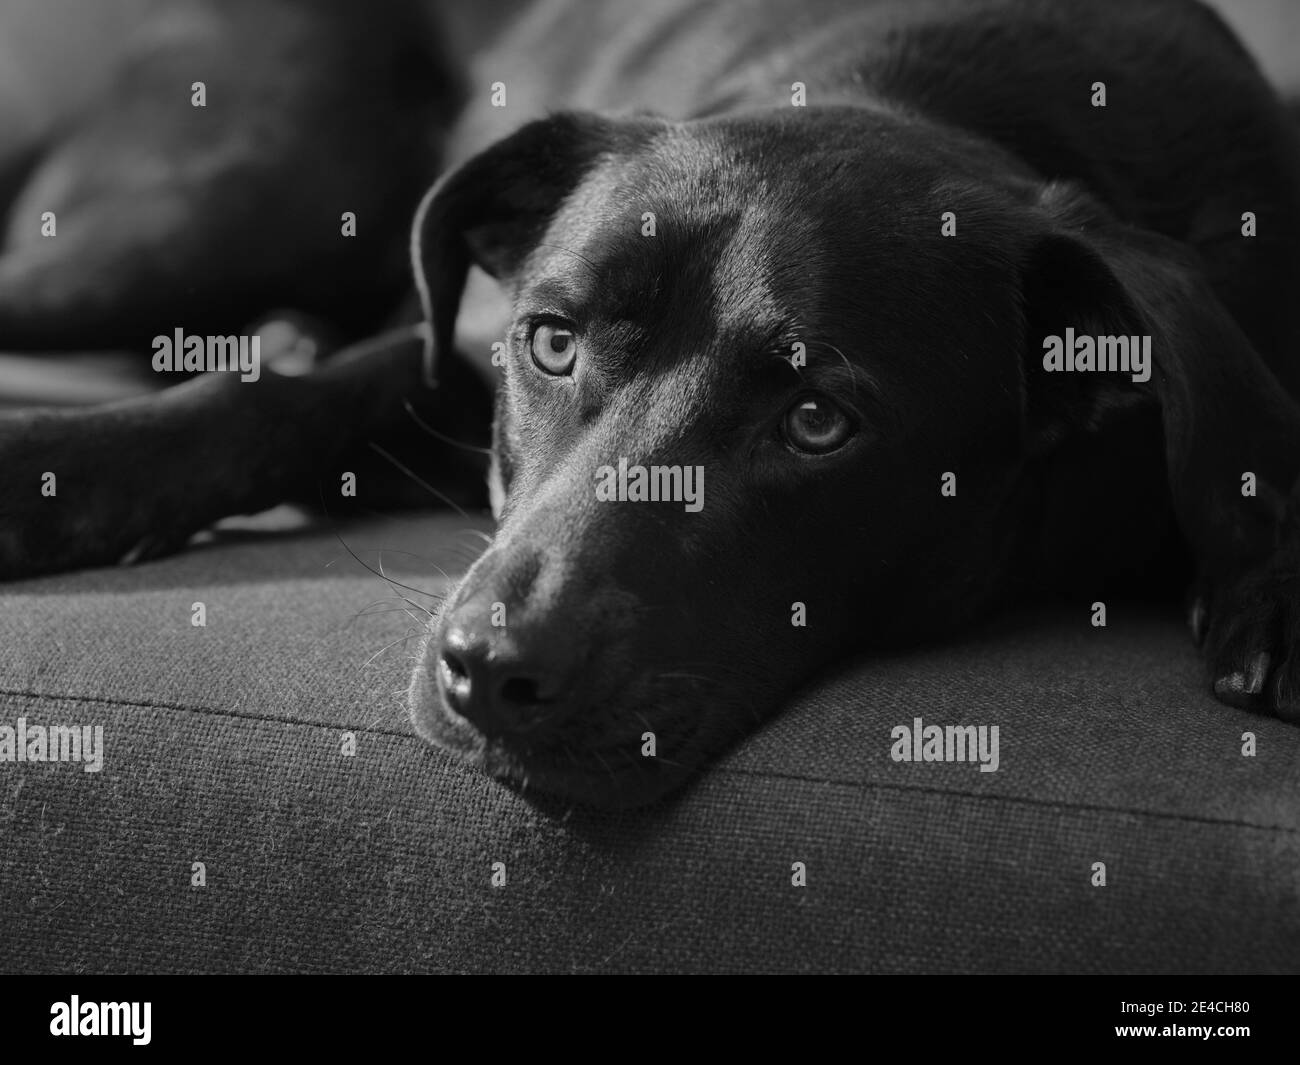 Faithful looking male dog, Labrador mix, on a sofa. Stock Photo